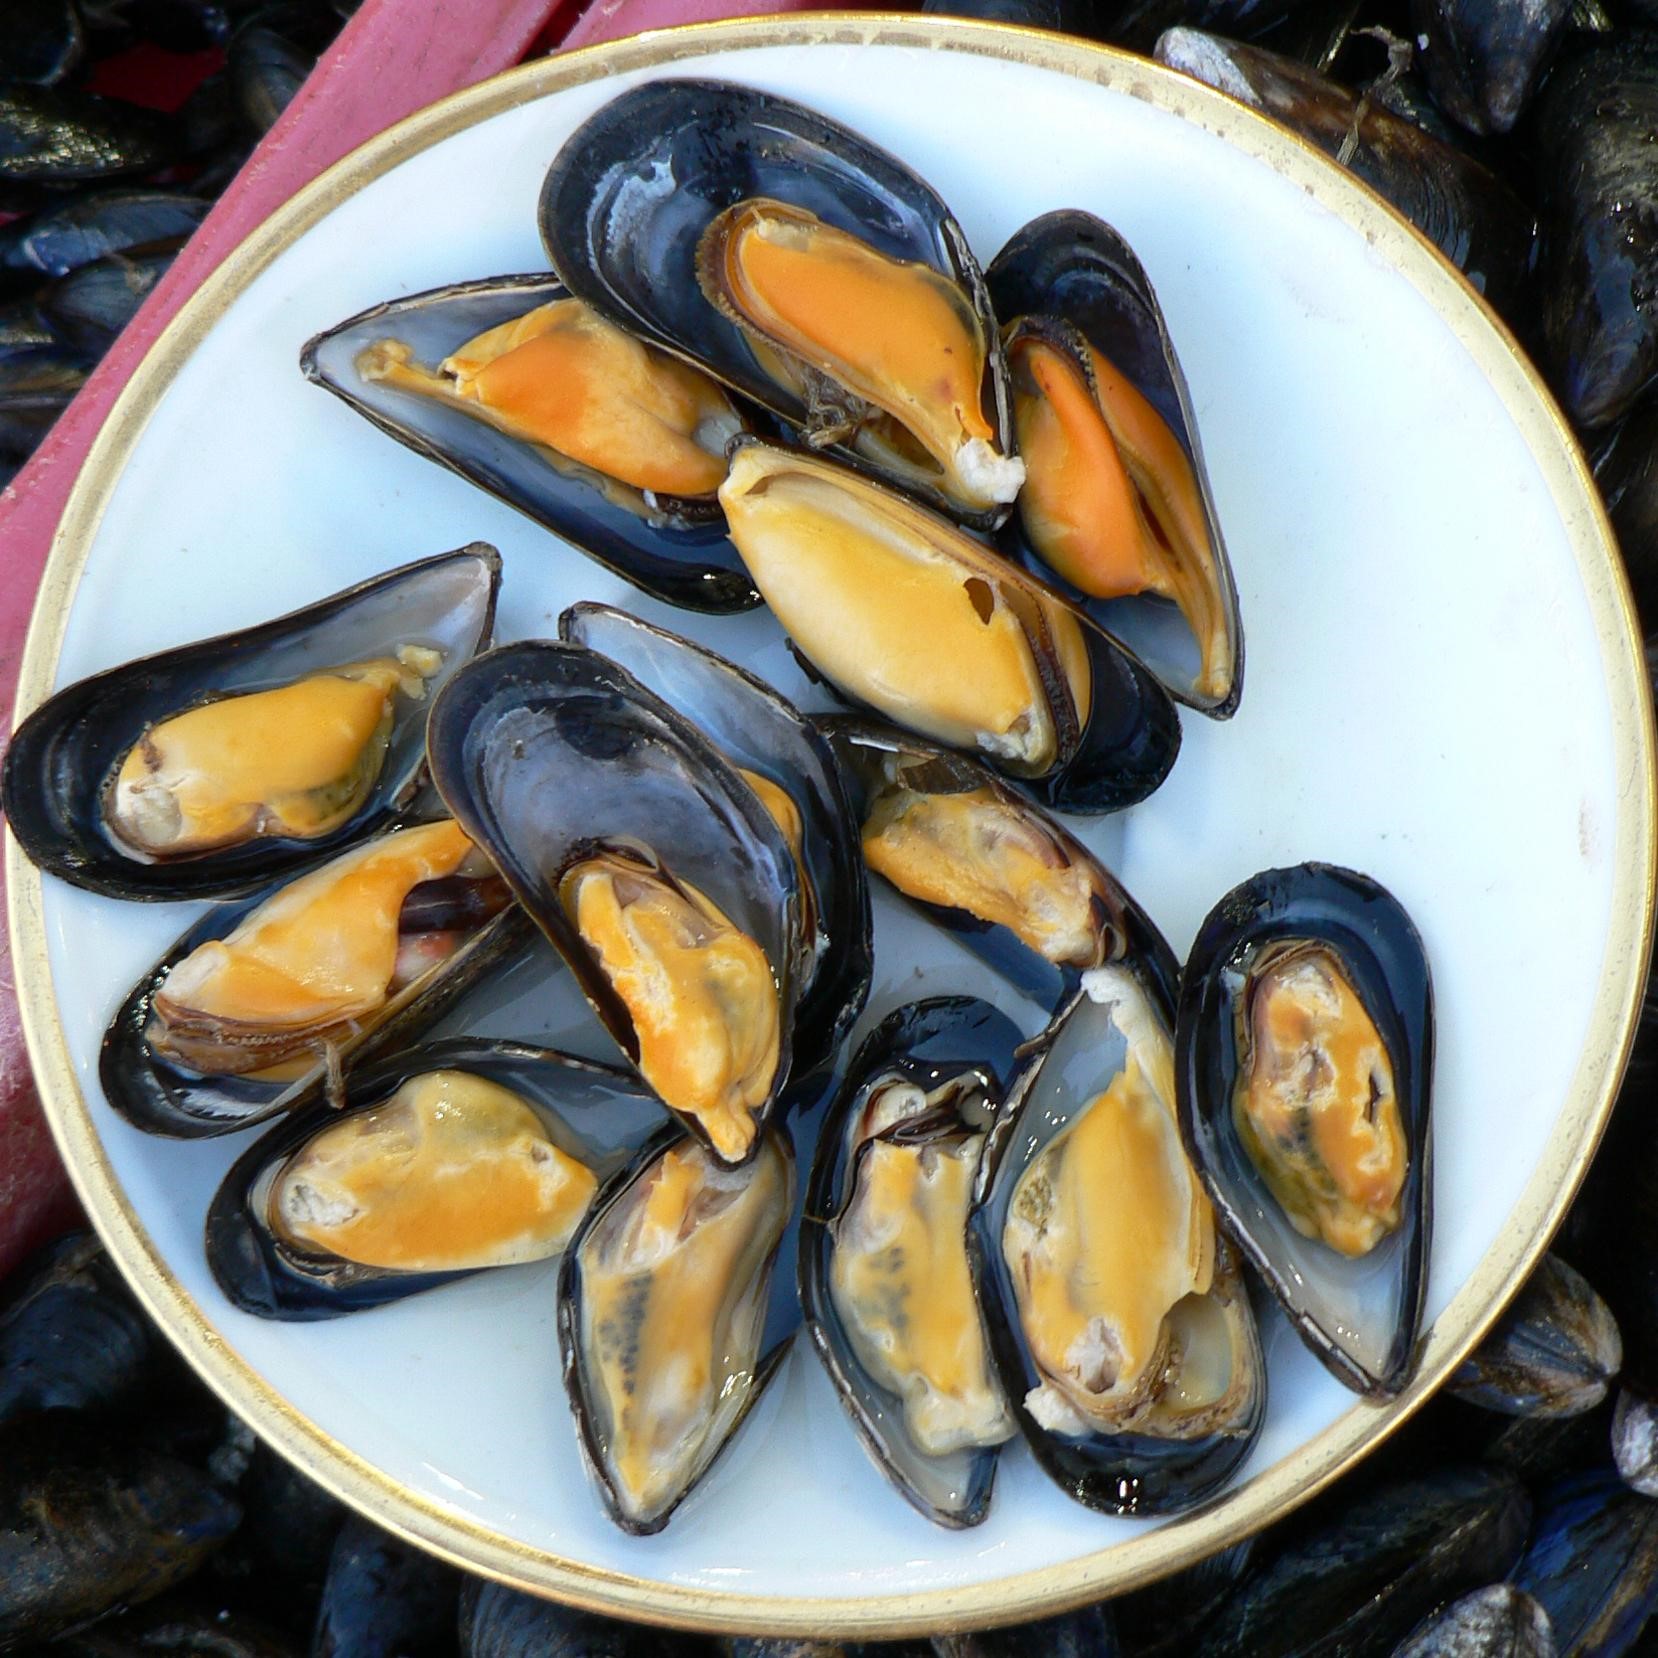 Eat fatty fish - mussels